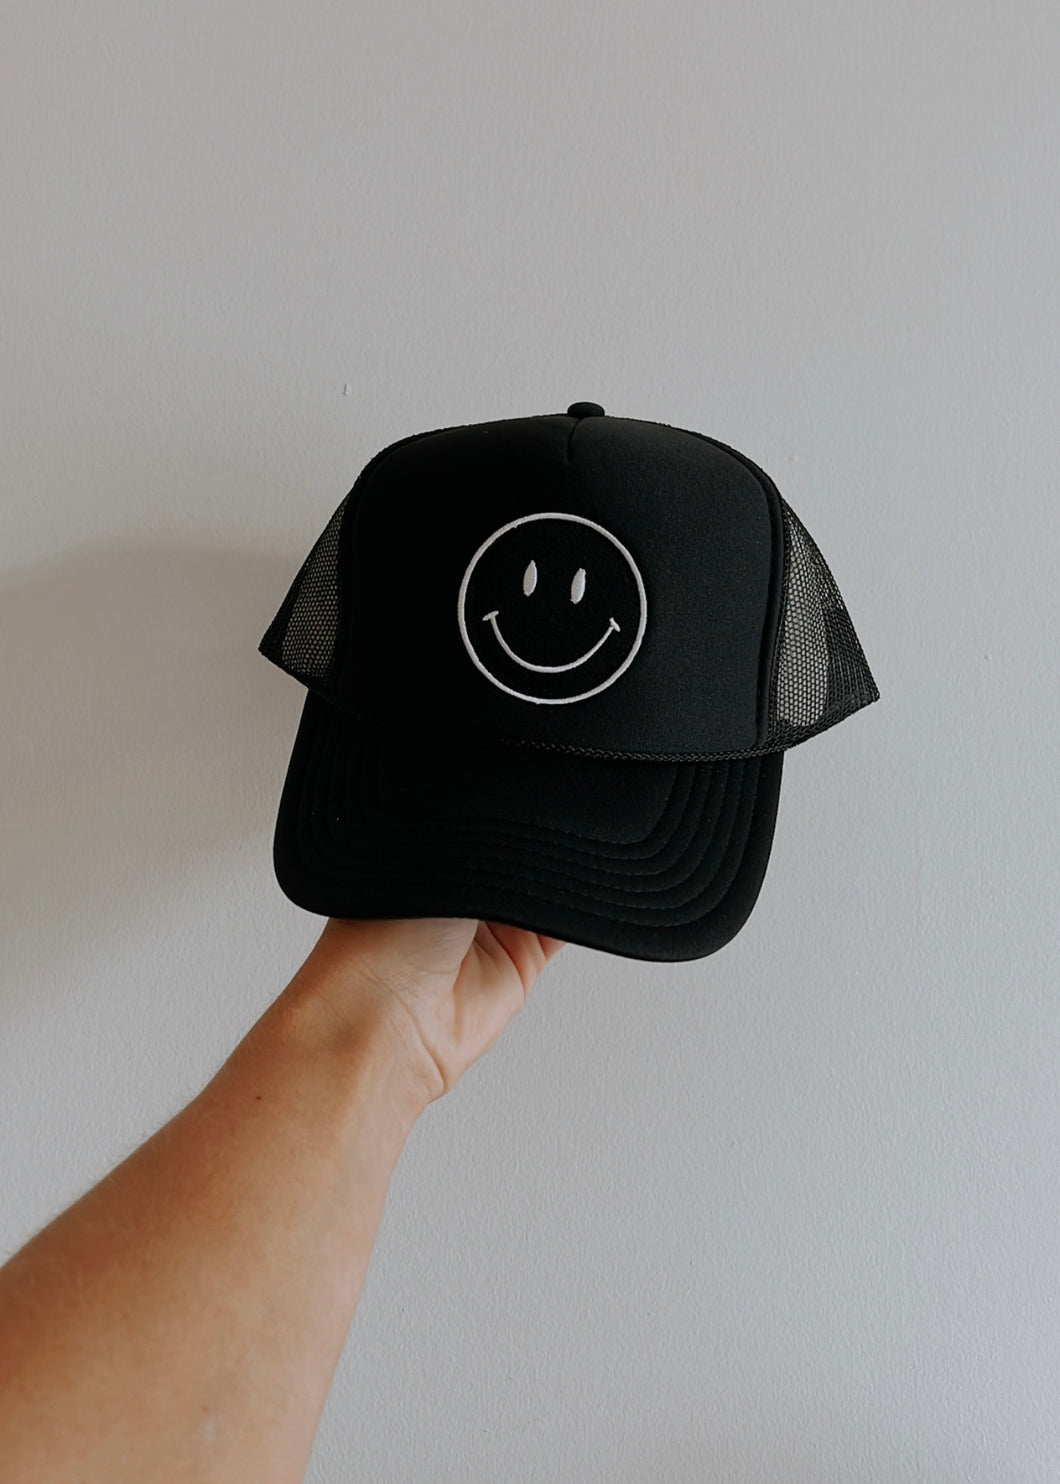 BLACK ON BLACK SMILEY TRUCKER HAT